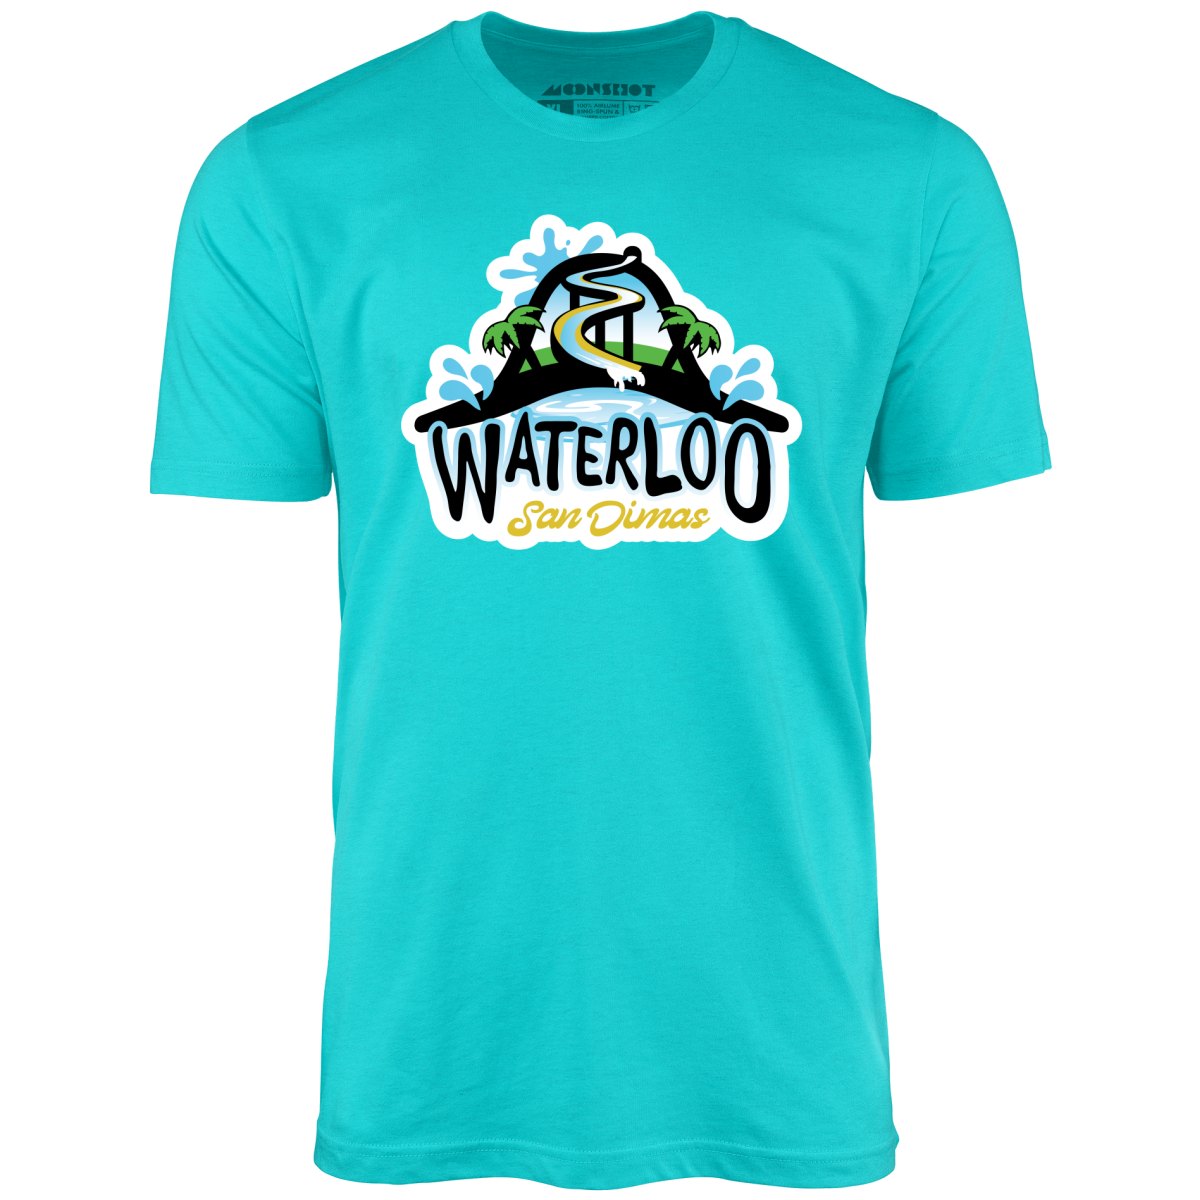 Bill & Ted - Waterloo Water Park San Dimas - Unisex T-Shirt